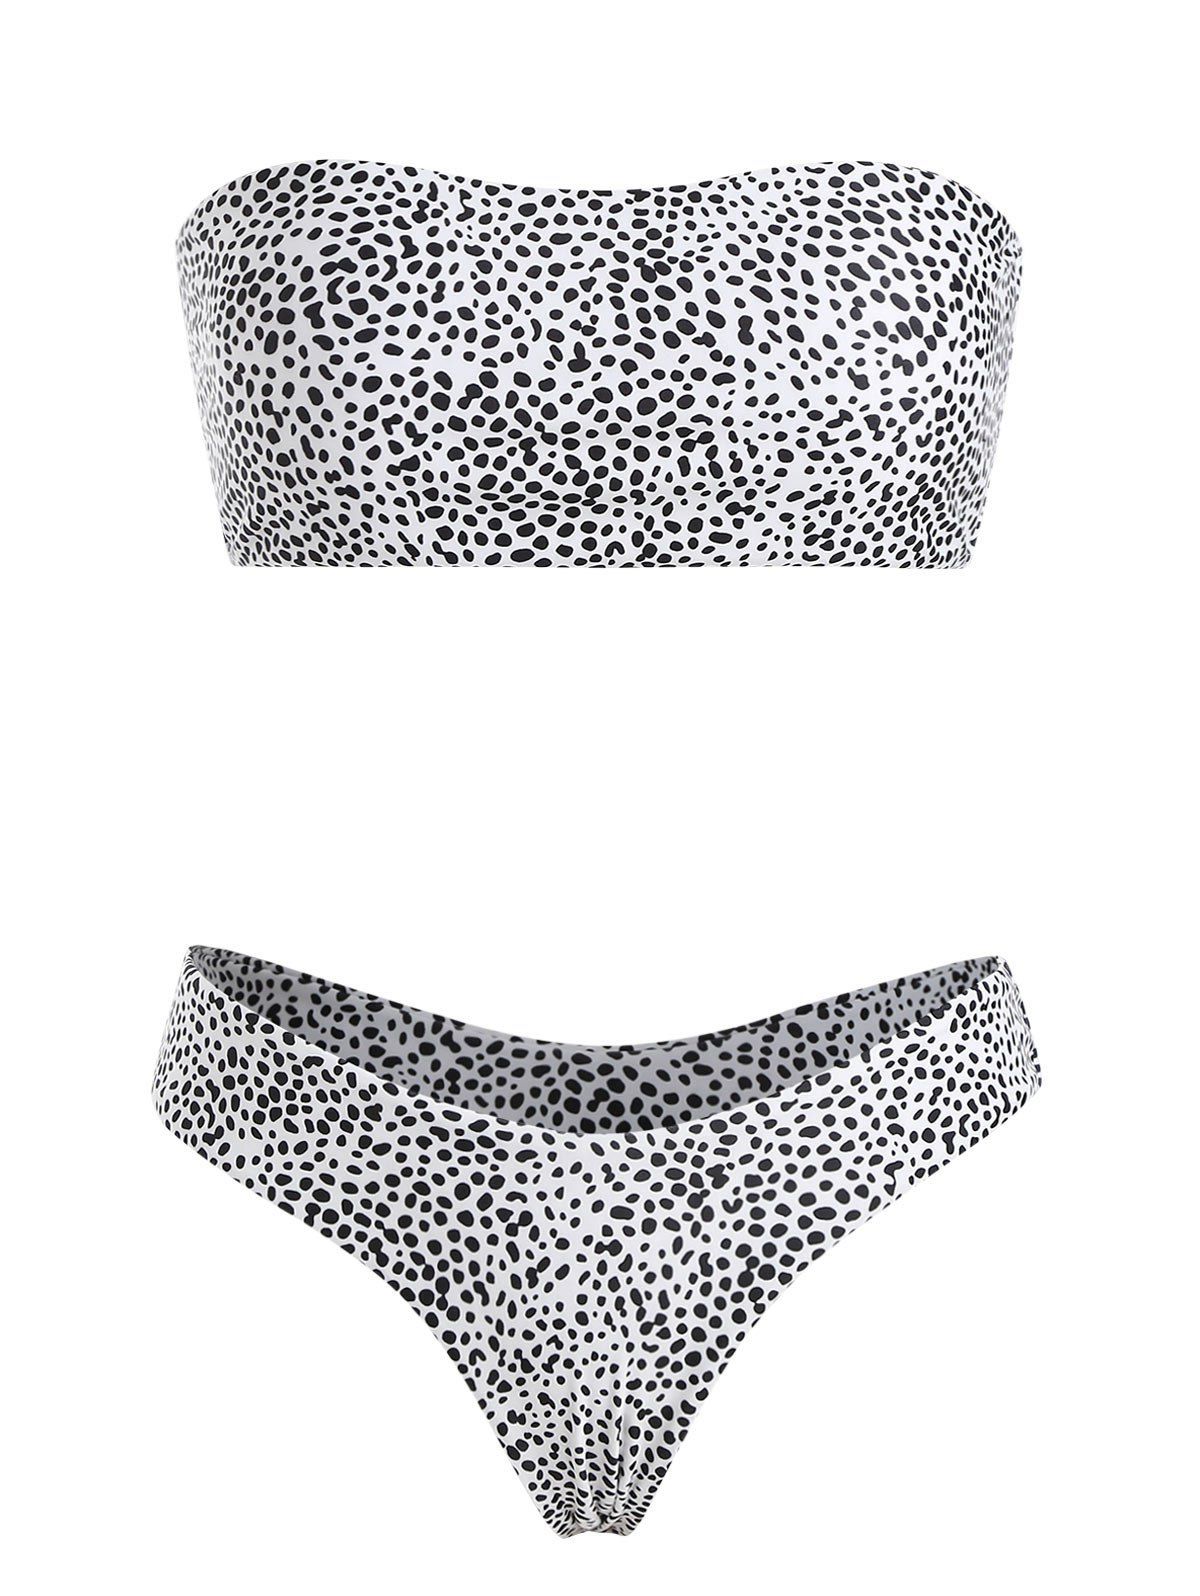 Leopard Print Thong Bandeau Bikini - WHITE S